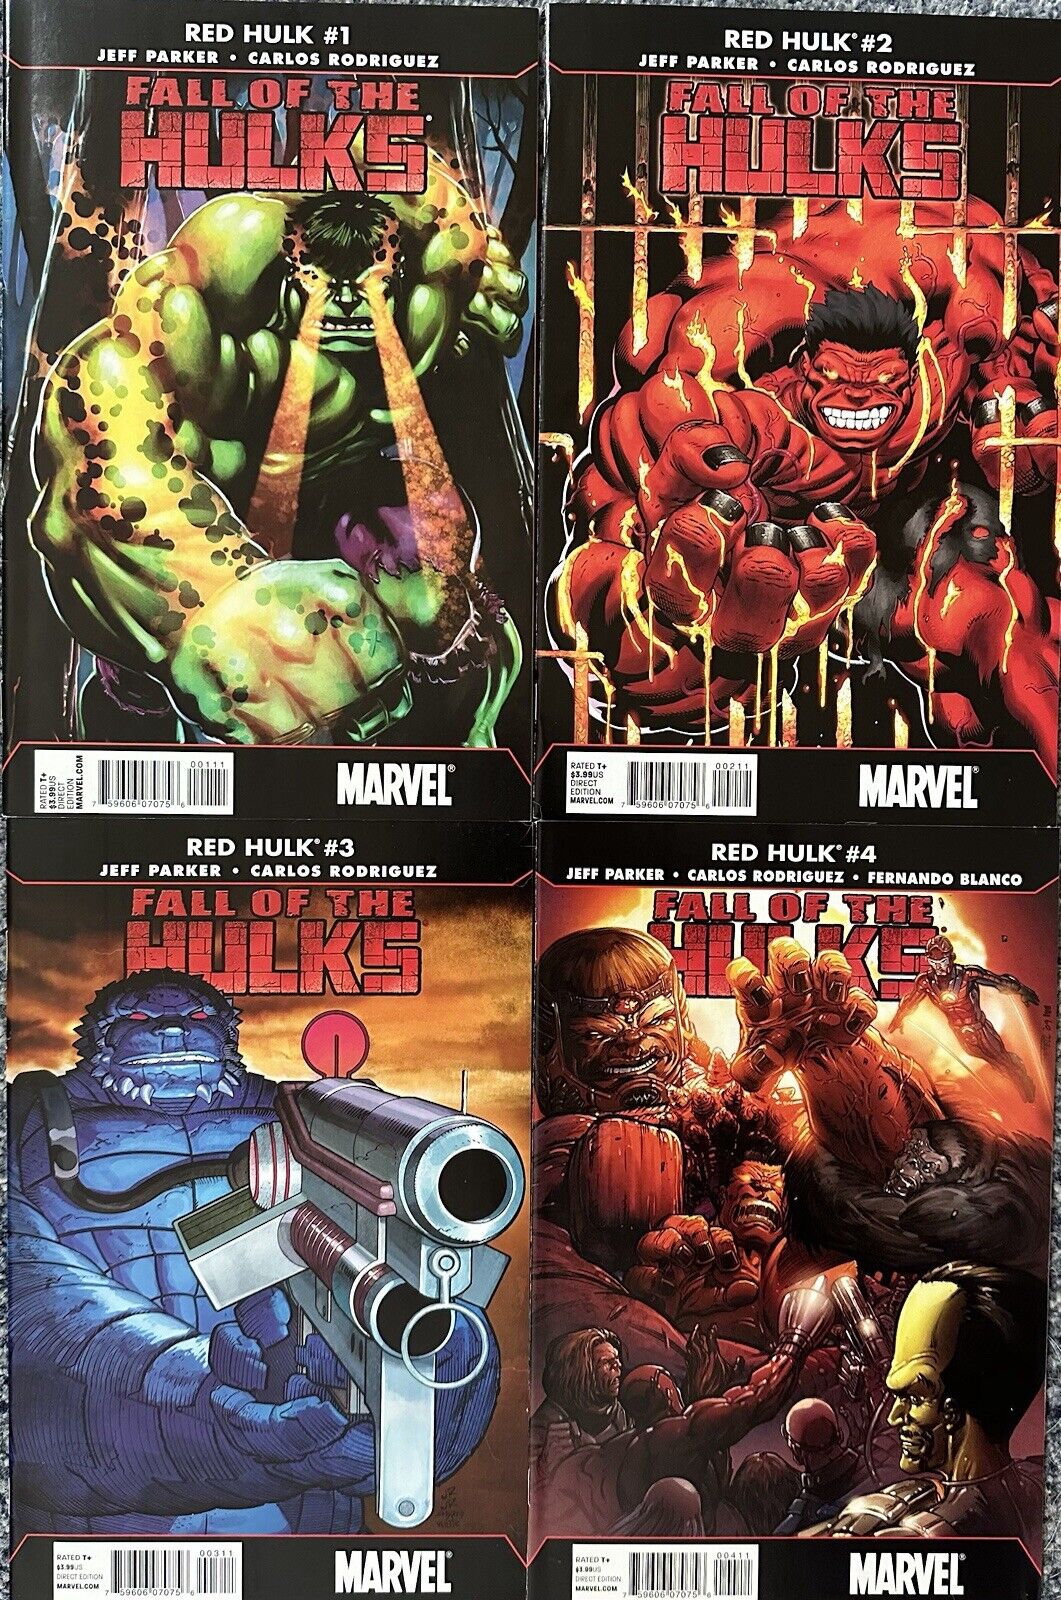 4 LOT set - Red Hulk #1 + 2 + 3 + 4 - Fall of the Hulks (Marvel comics 2010)